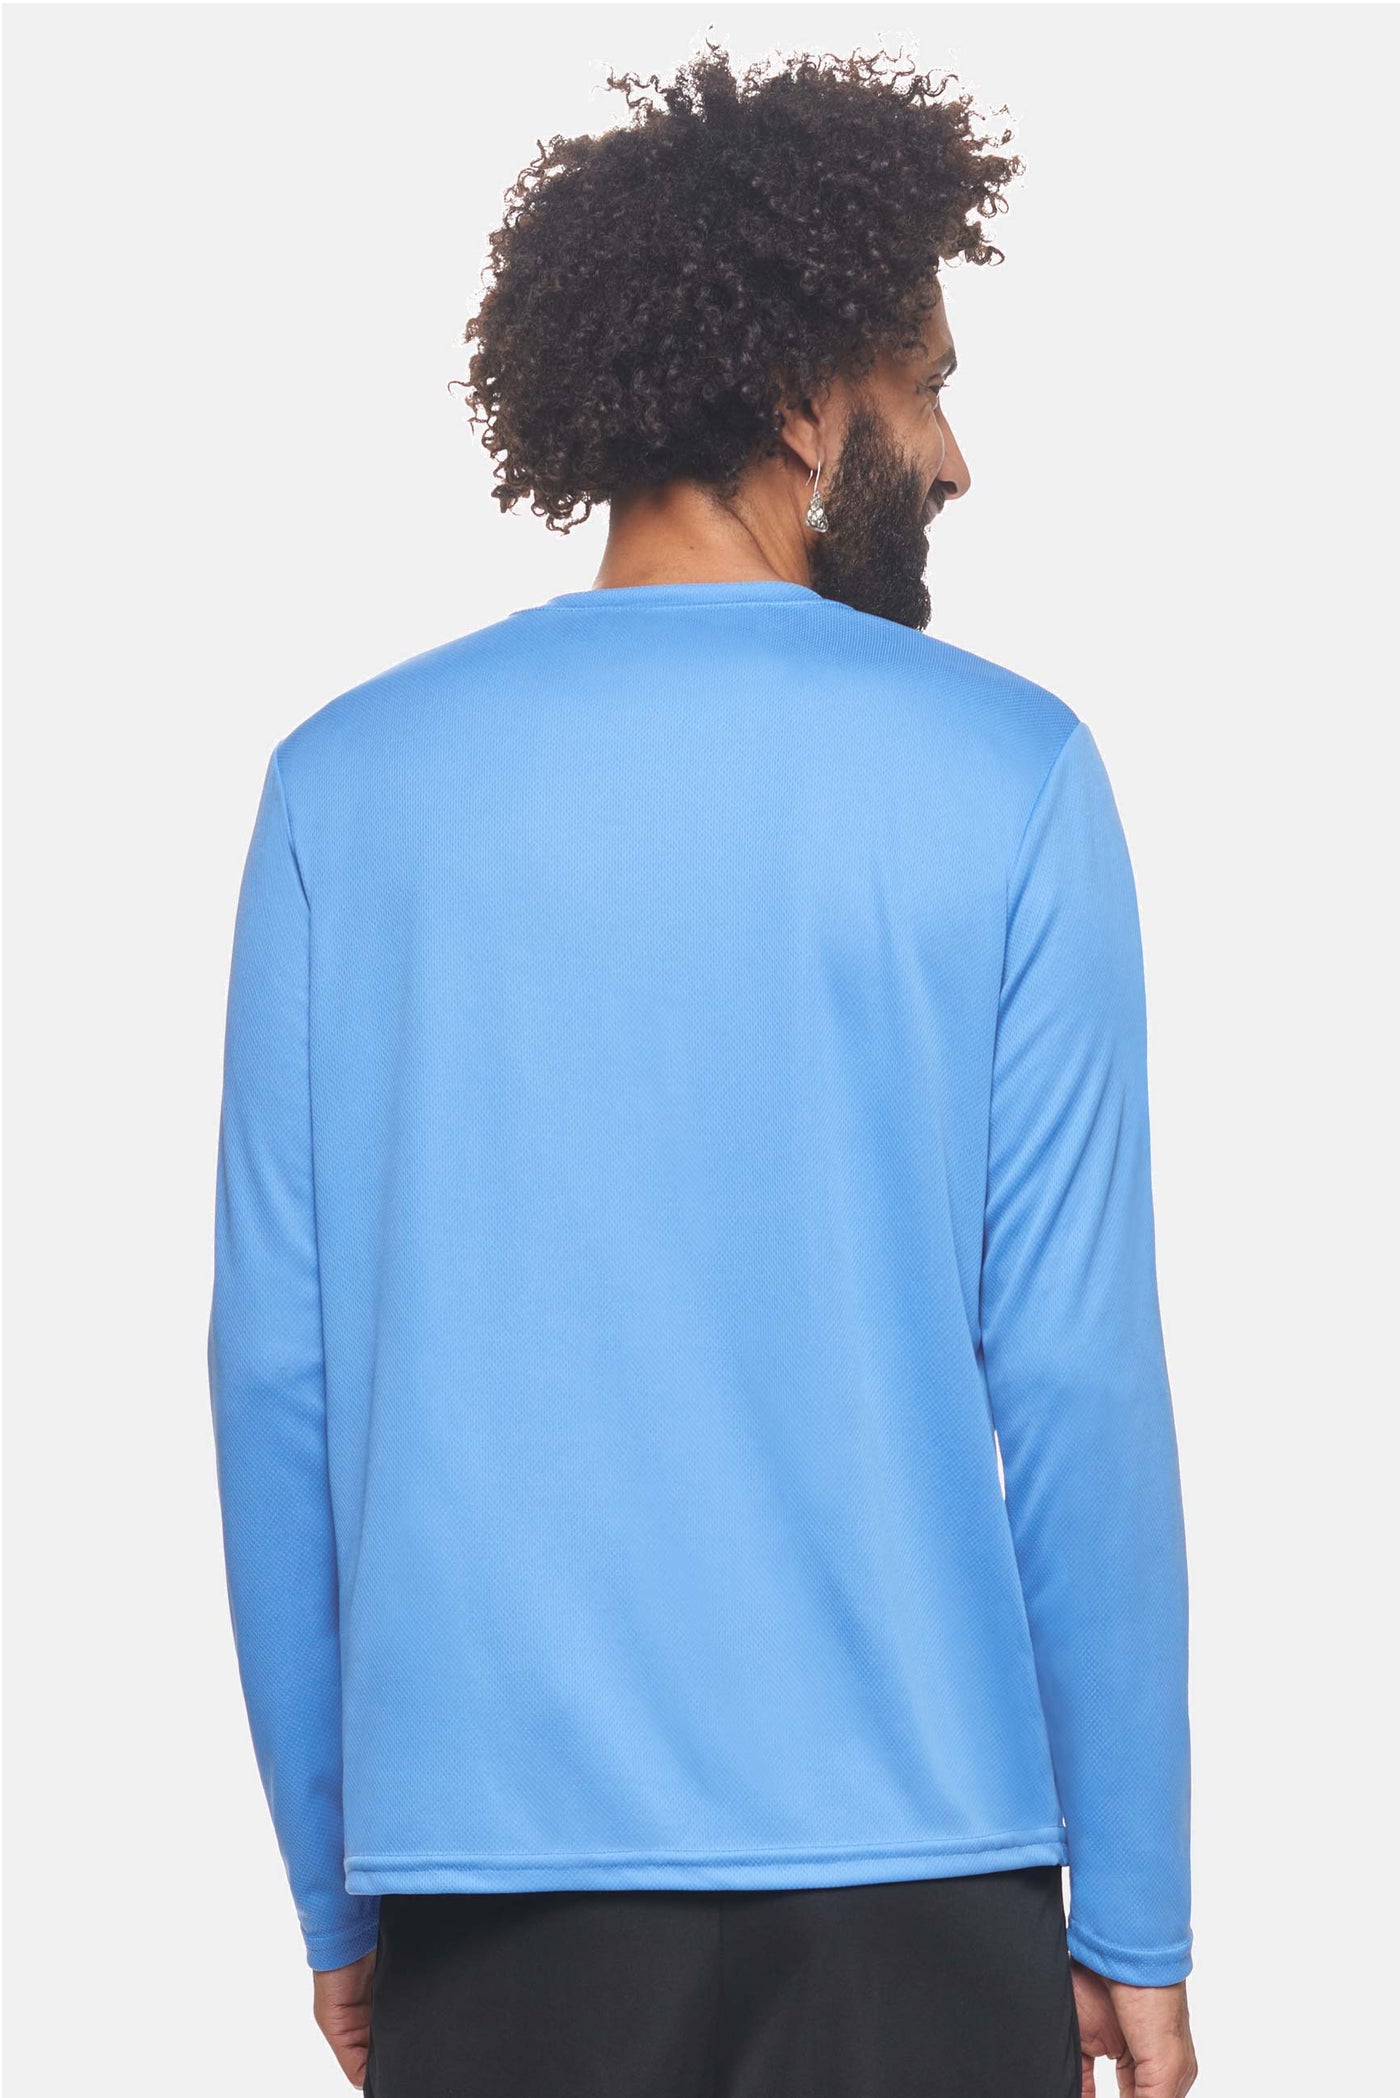 Expert Brand Apparel Men's Oxymesh Crewneck Long Sleeve Tech Tee AJ801D Carolina-Blue image 3#color_carolina-blue